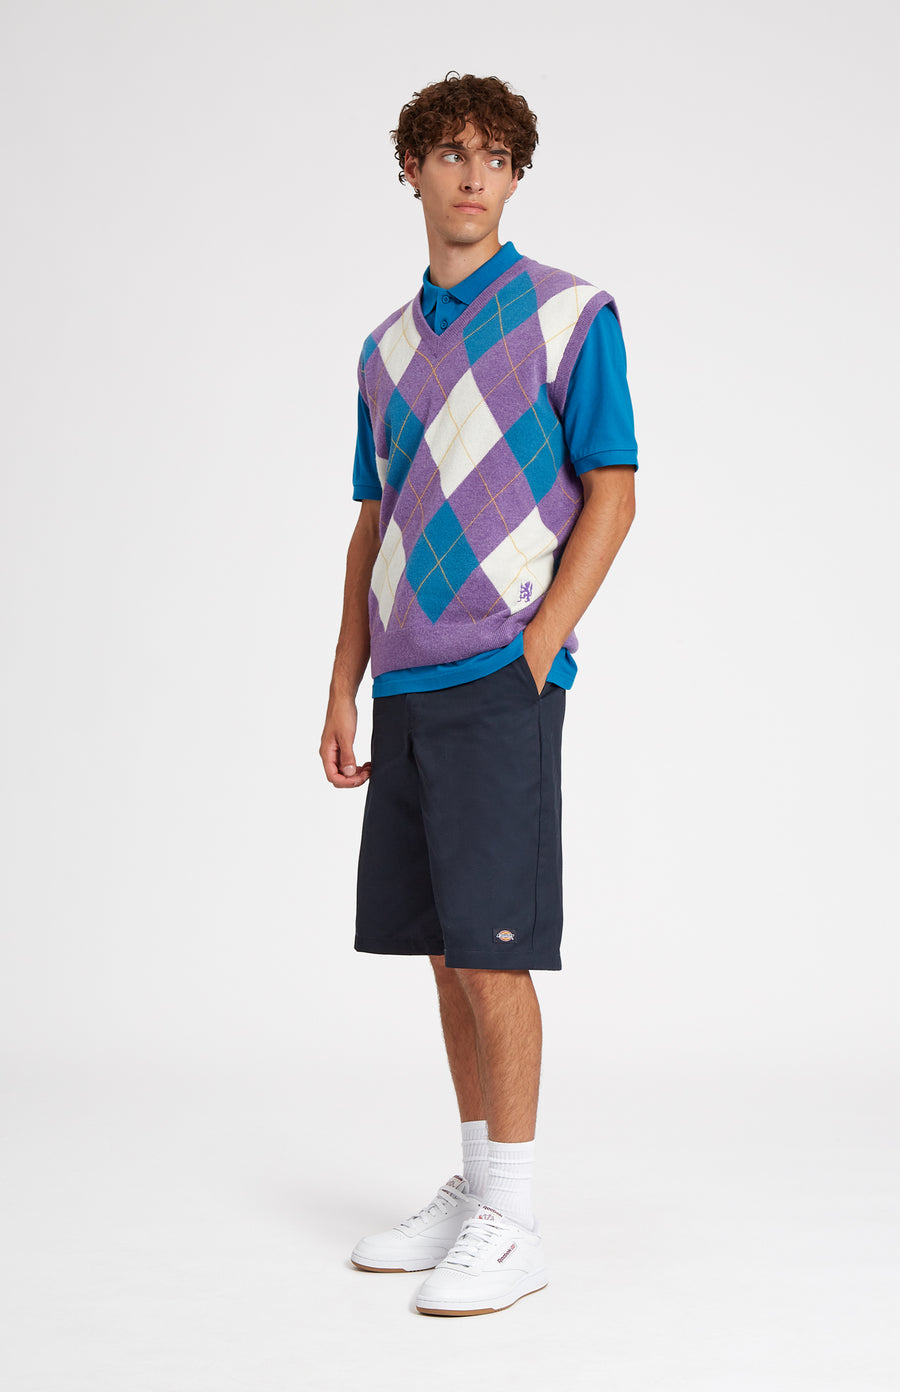 Heritage argyle golf sleeveless jumper in Purple & Ivory on mal;e model - Pringle of Scotland 